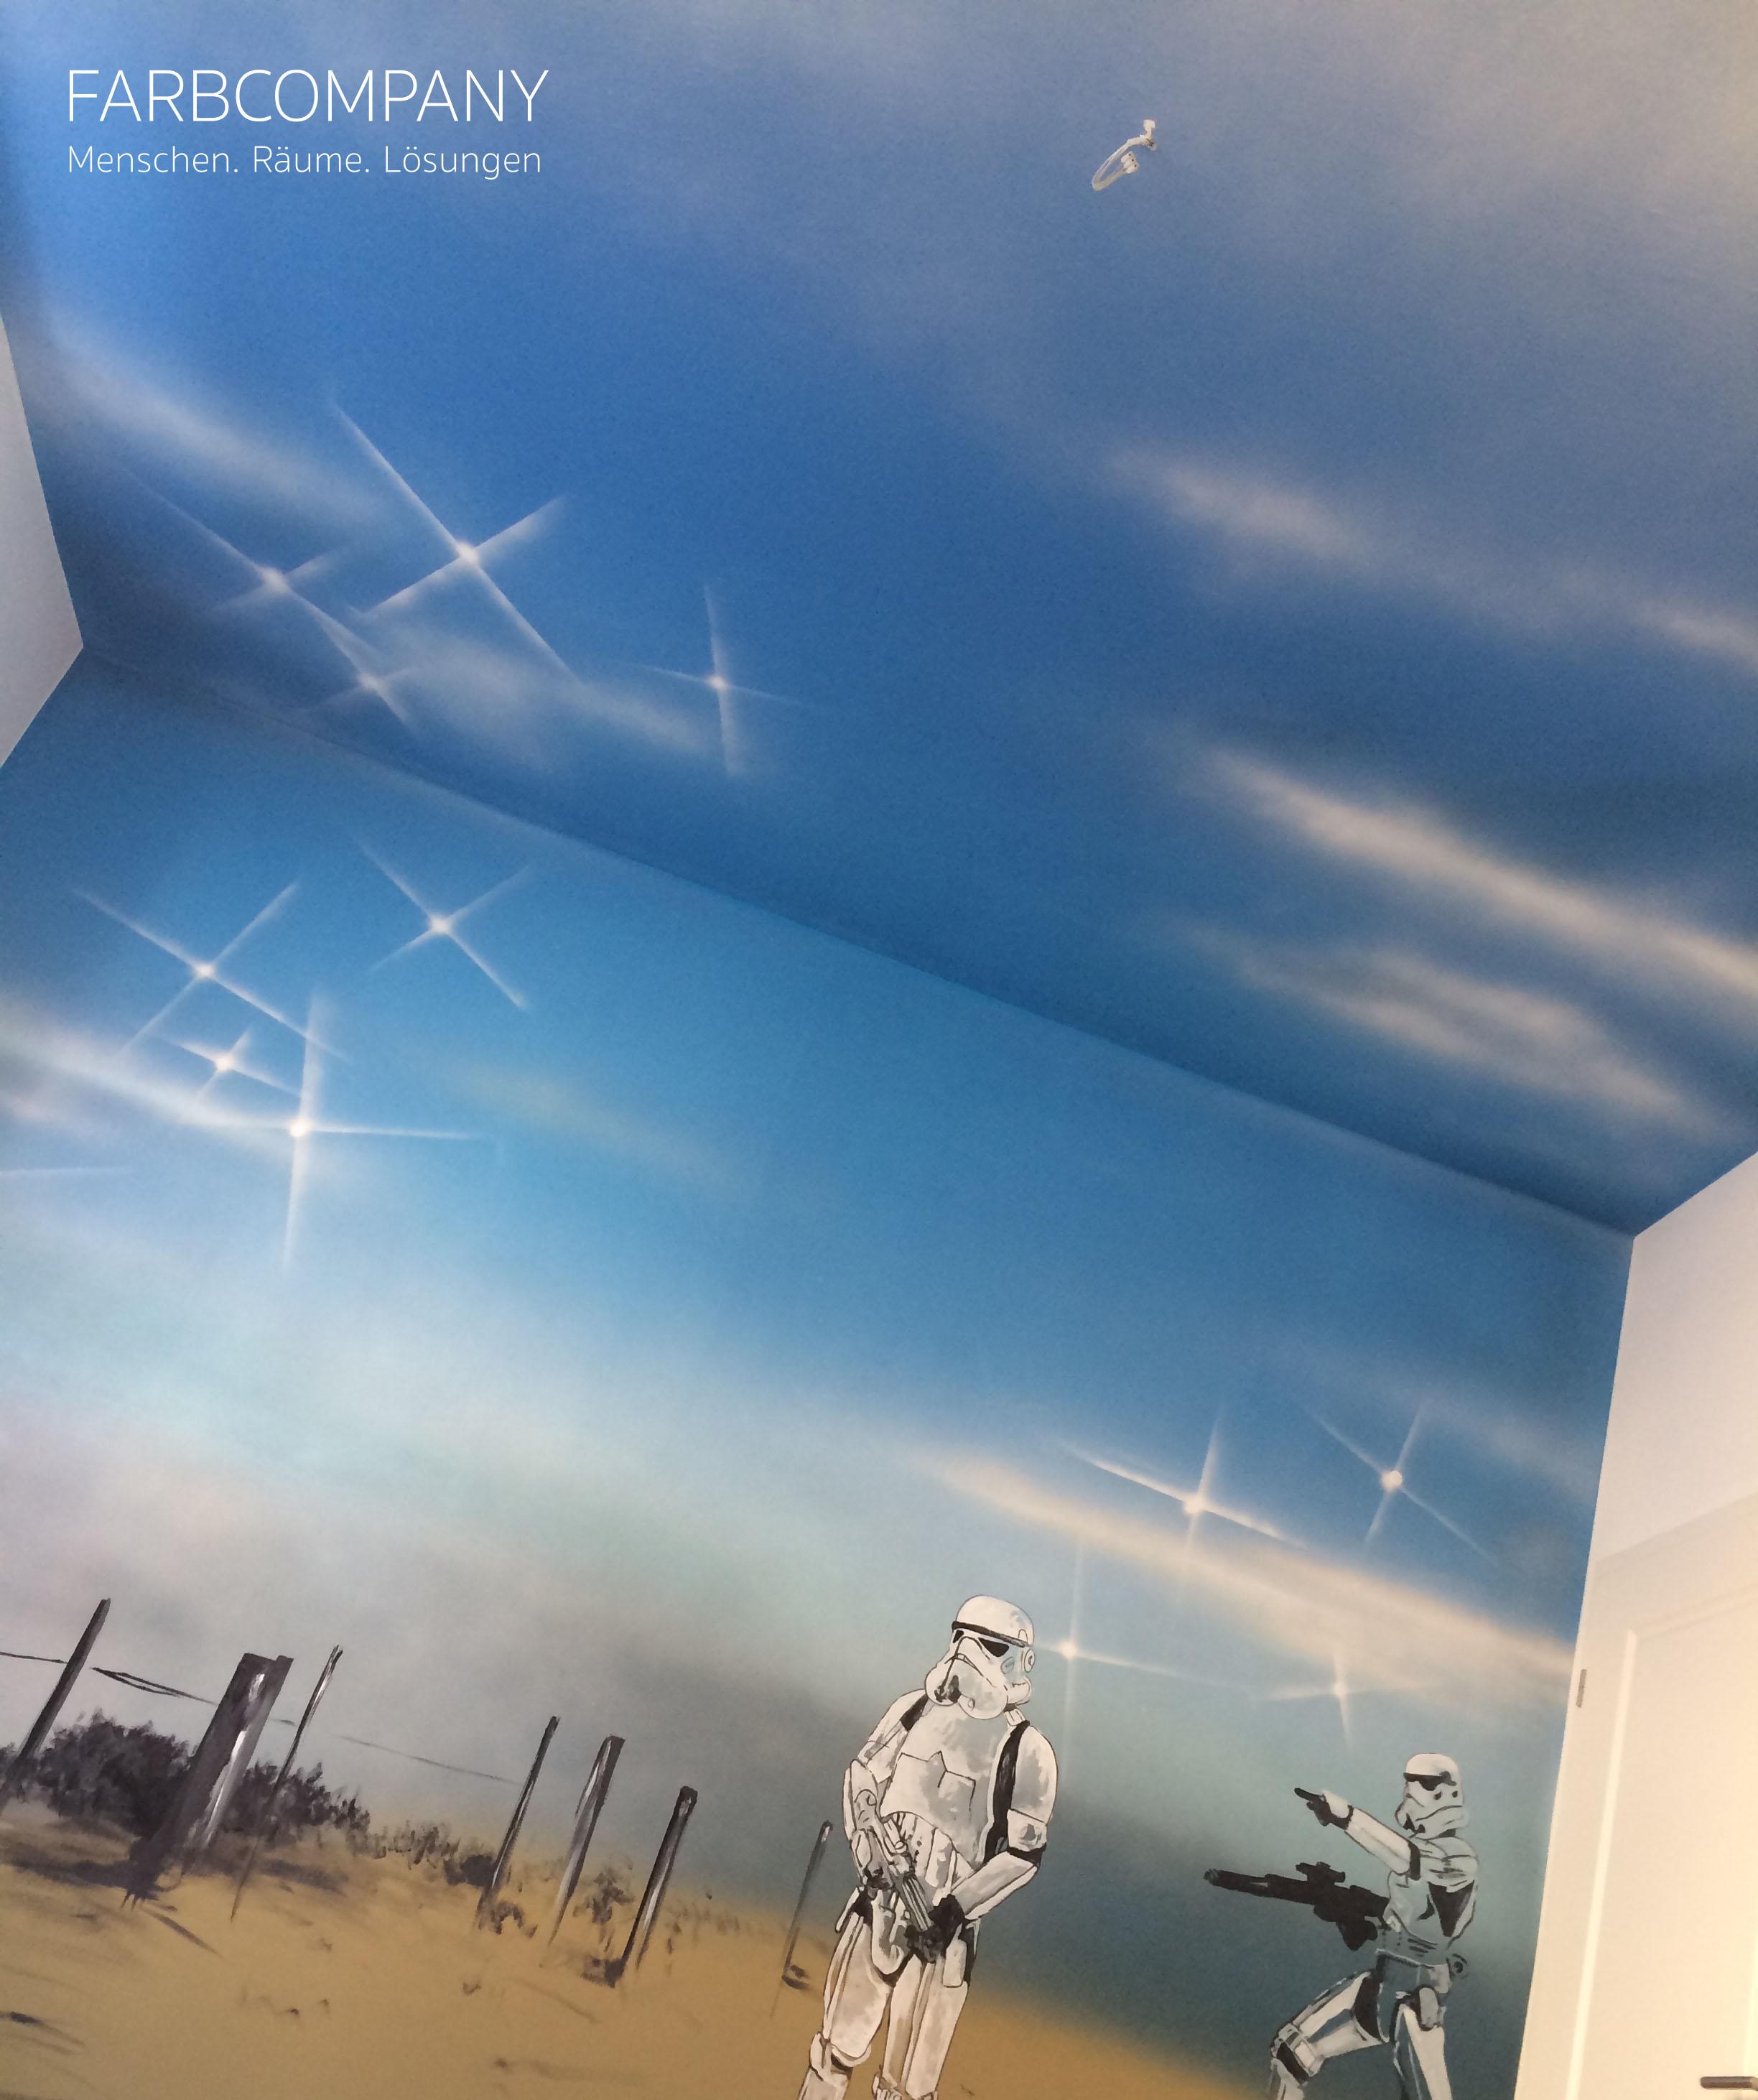 Wandmalerei eines Kinderzimmers in Hannover. #wandgestaltung #wandmalerei #airbrushwandgestaltung #wandmalereikinderzimmer ©Farbcompany